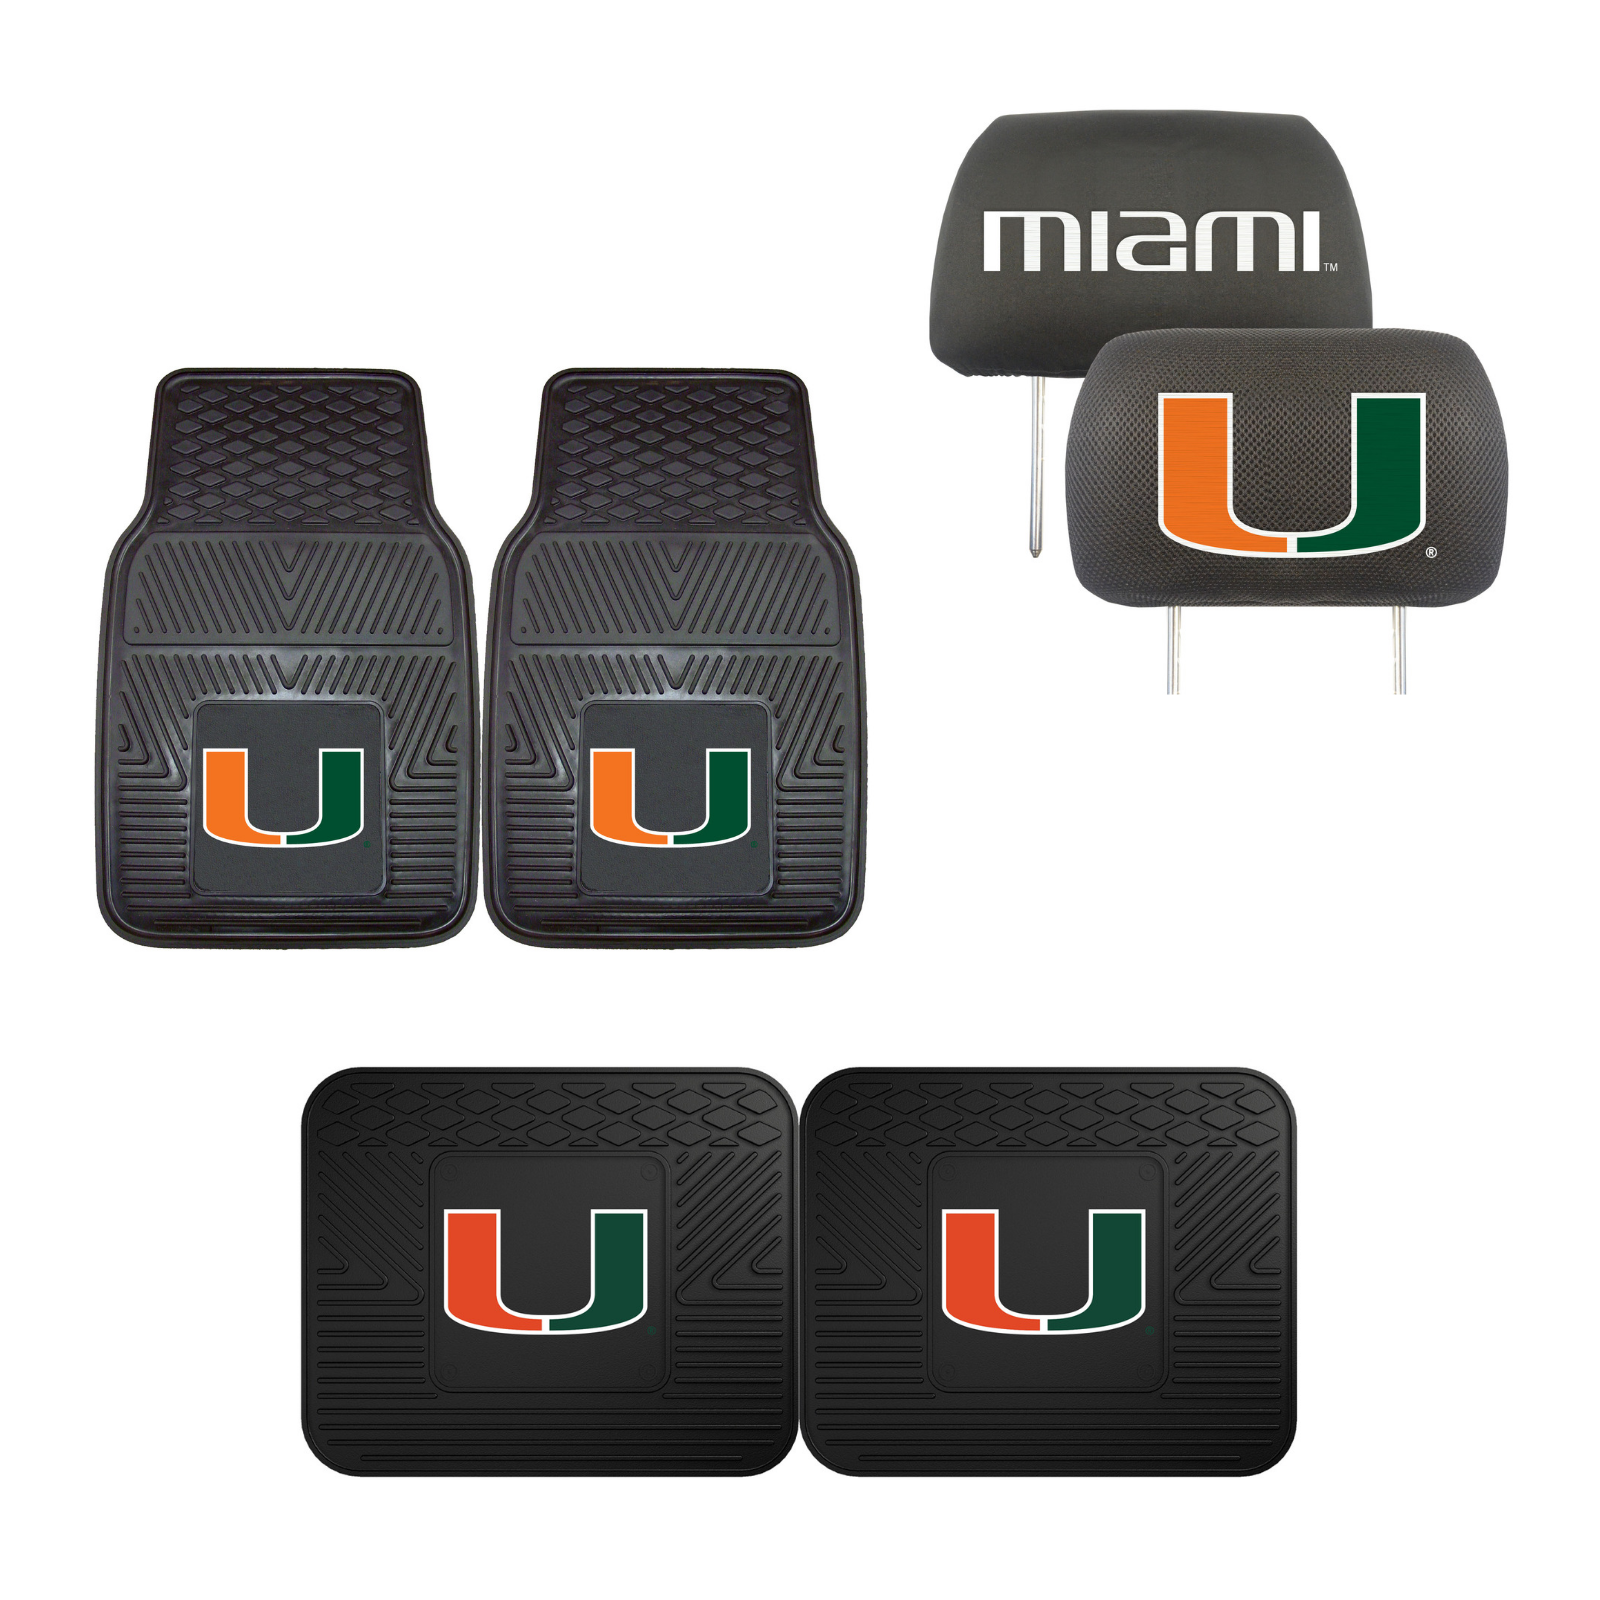 University of Miami Hurricanes  4pc Car Mats,Headrest Covers & Car Accessories